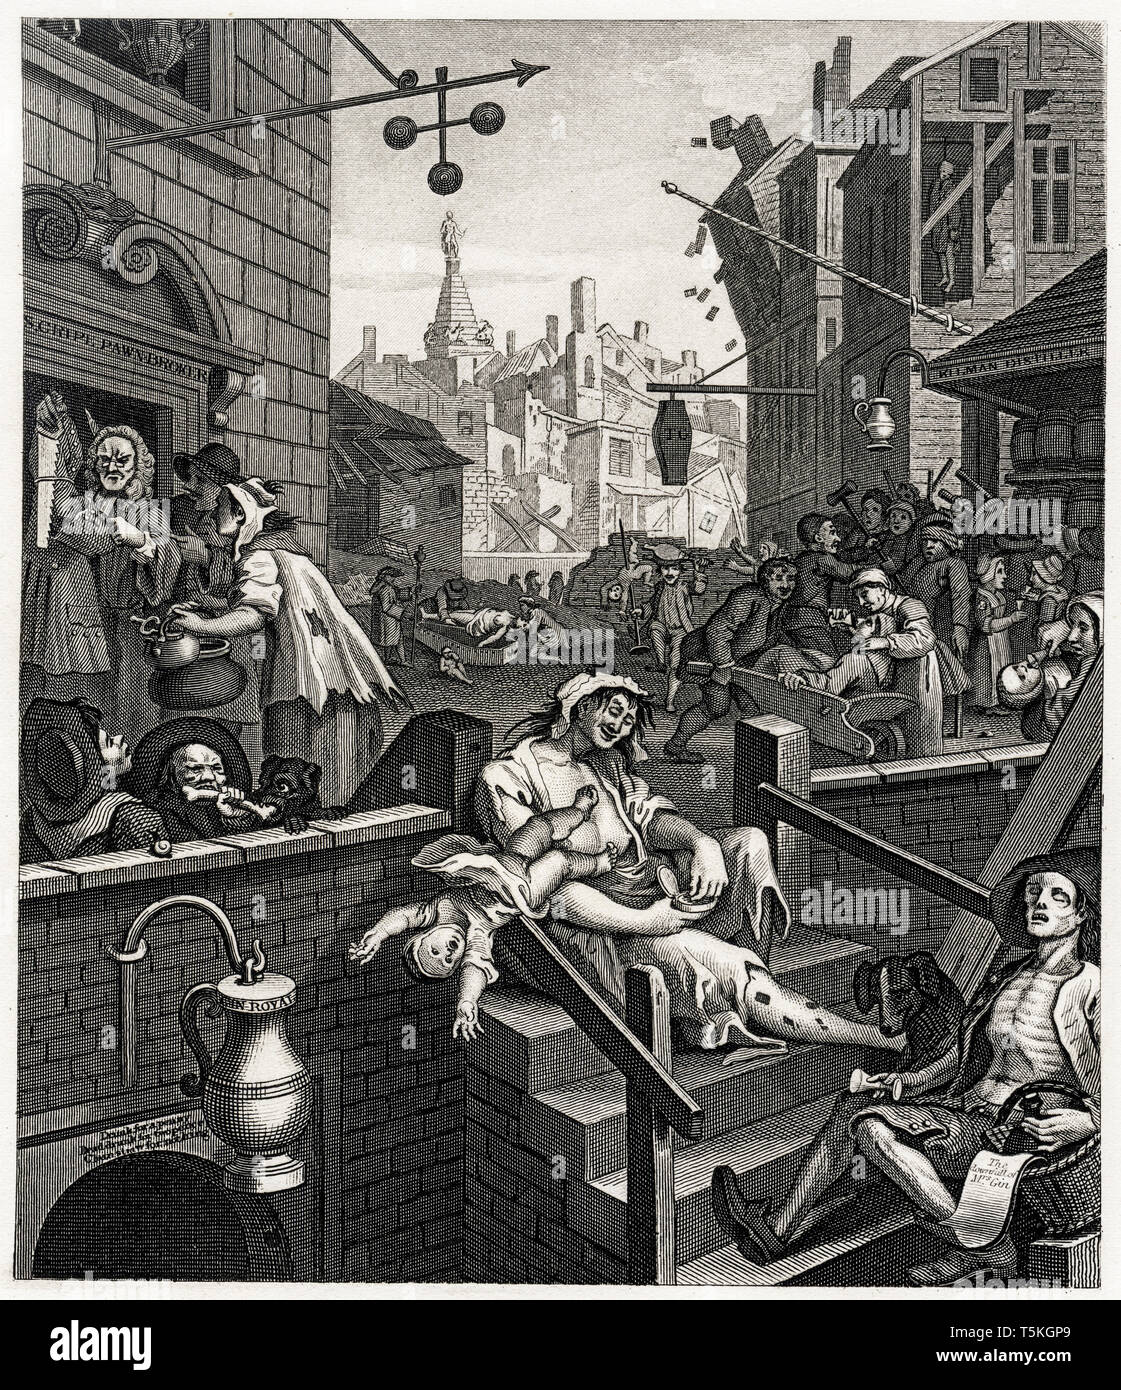 William Hogarth, Gin Lane, incisione, c. 1750 Foto Stock